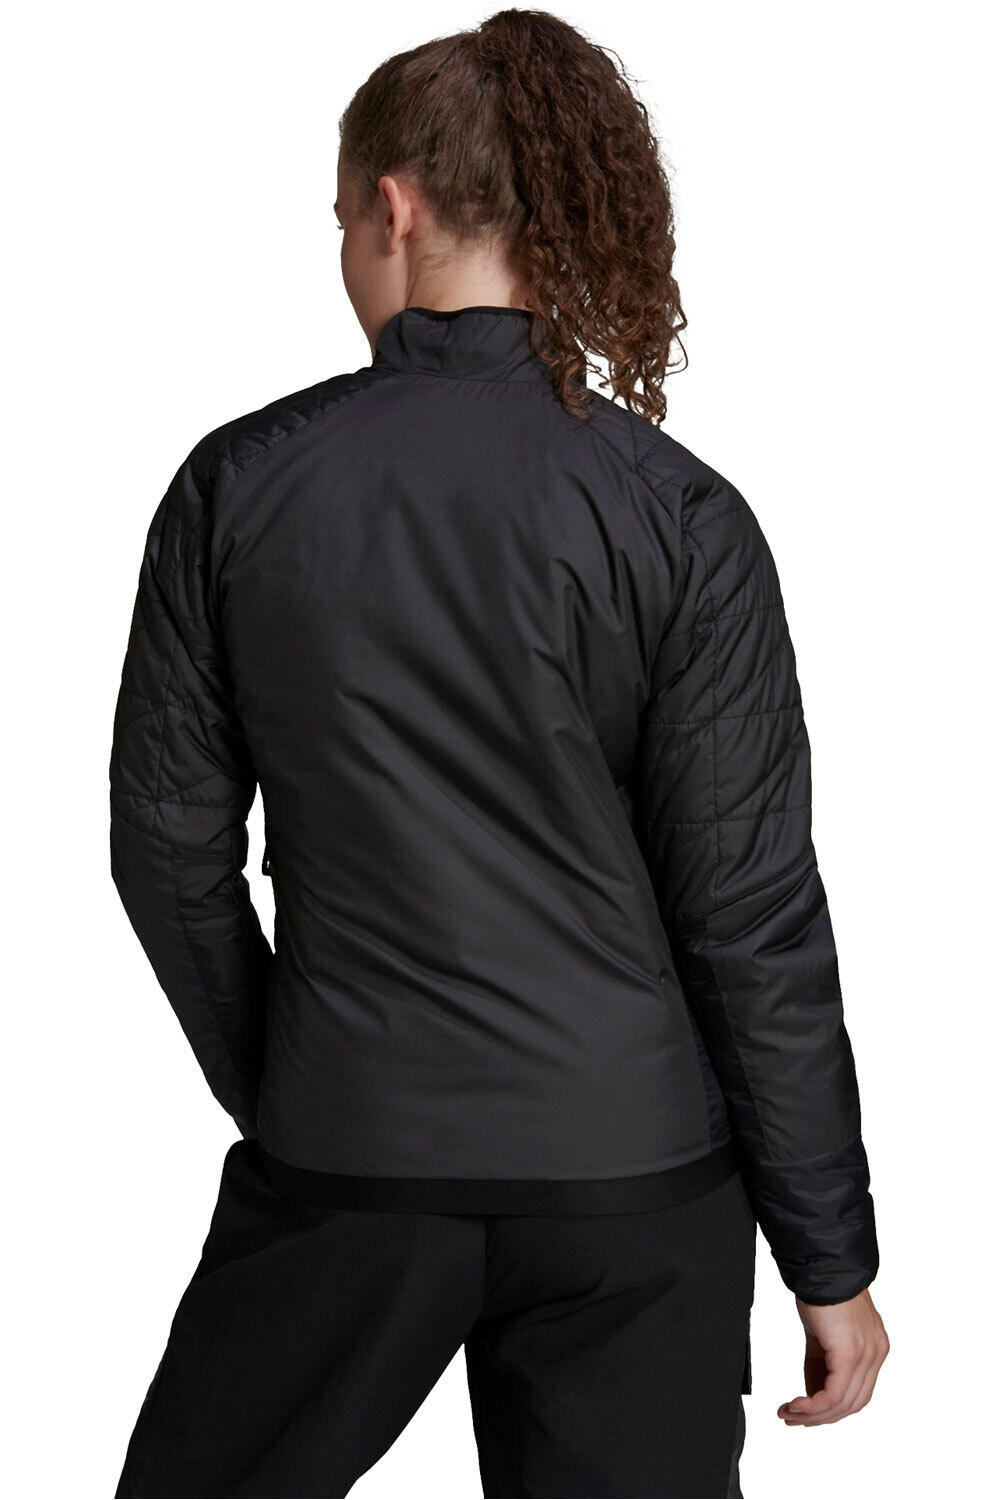 adidas chaqueta outdoor mujer Terrex Multi Synthetic Insulated vista trasera